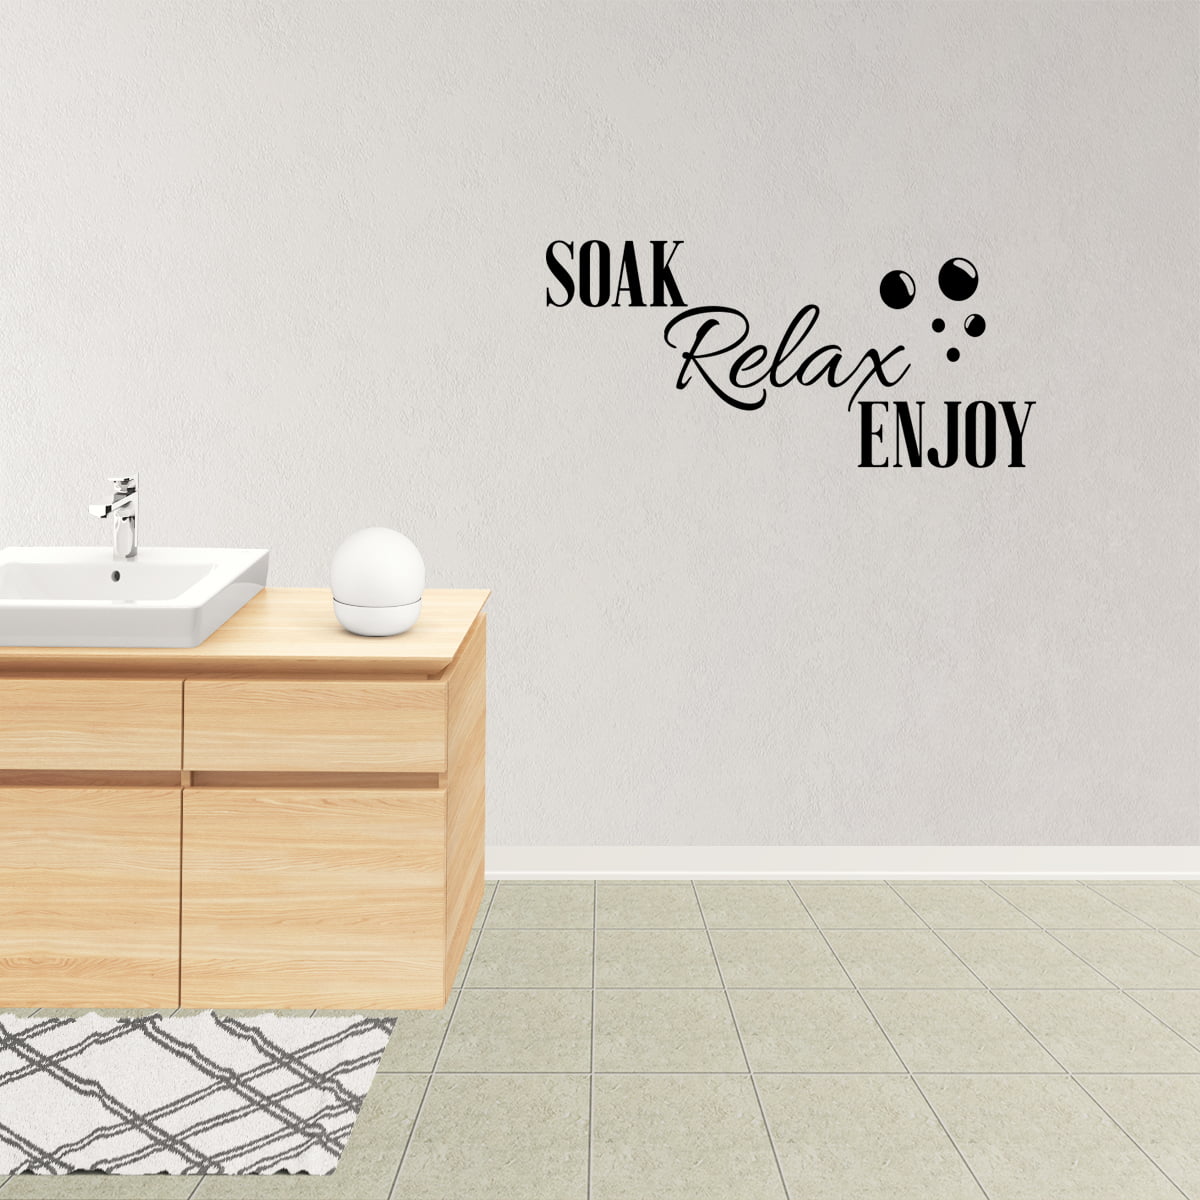 SOAK/RELAX/ENJOY BATHROOM WALL STICKER ART DECALS QUOTE 